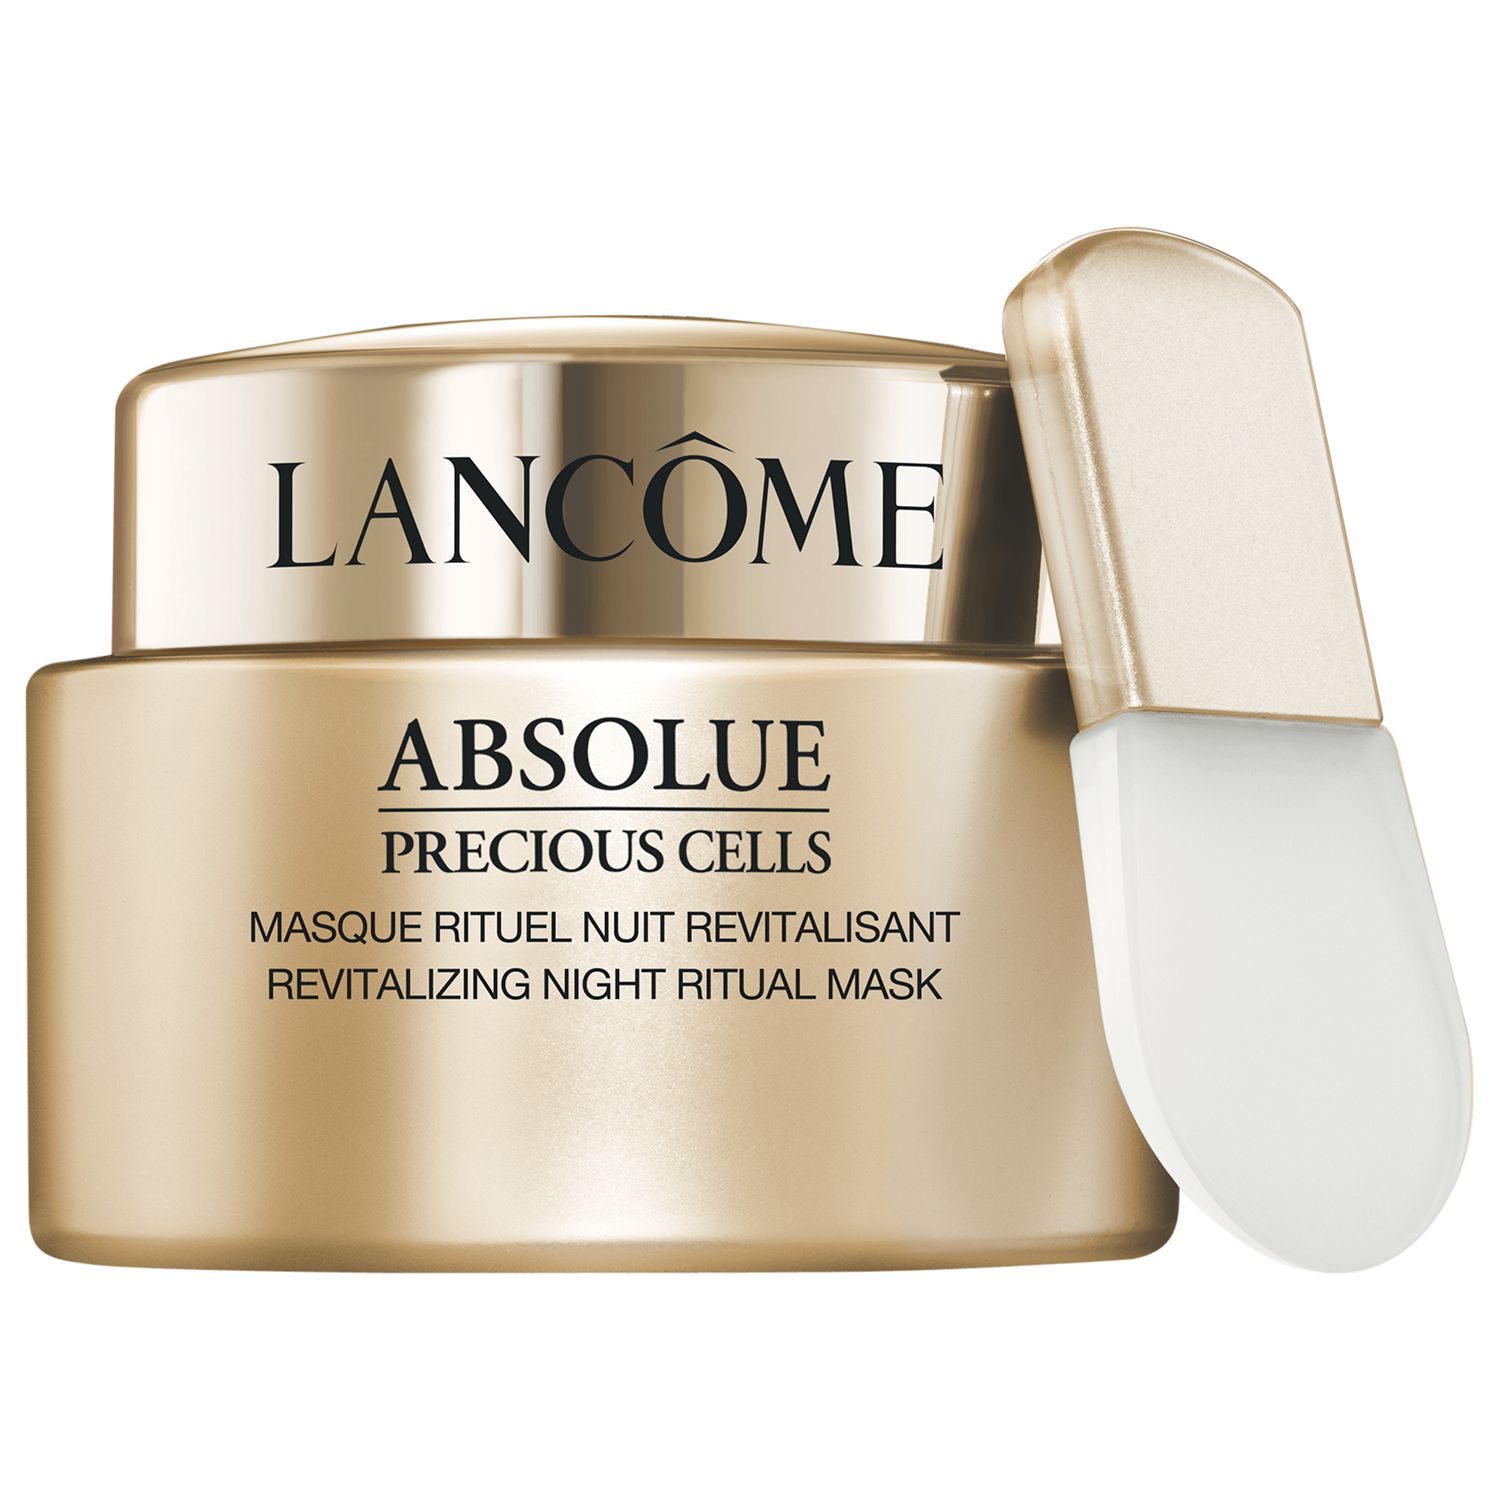 Lancôme Absolue Precious Cells Revitalising Night Ritual Mask, 75ml at Lewis & Partners